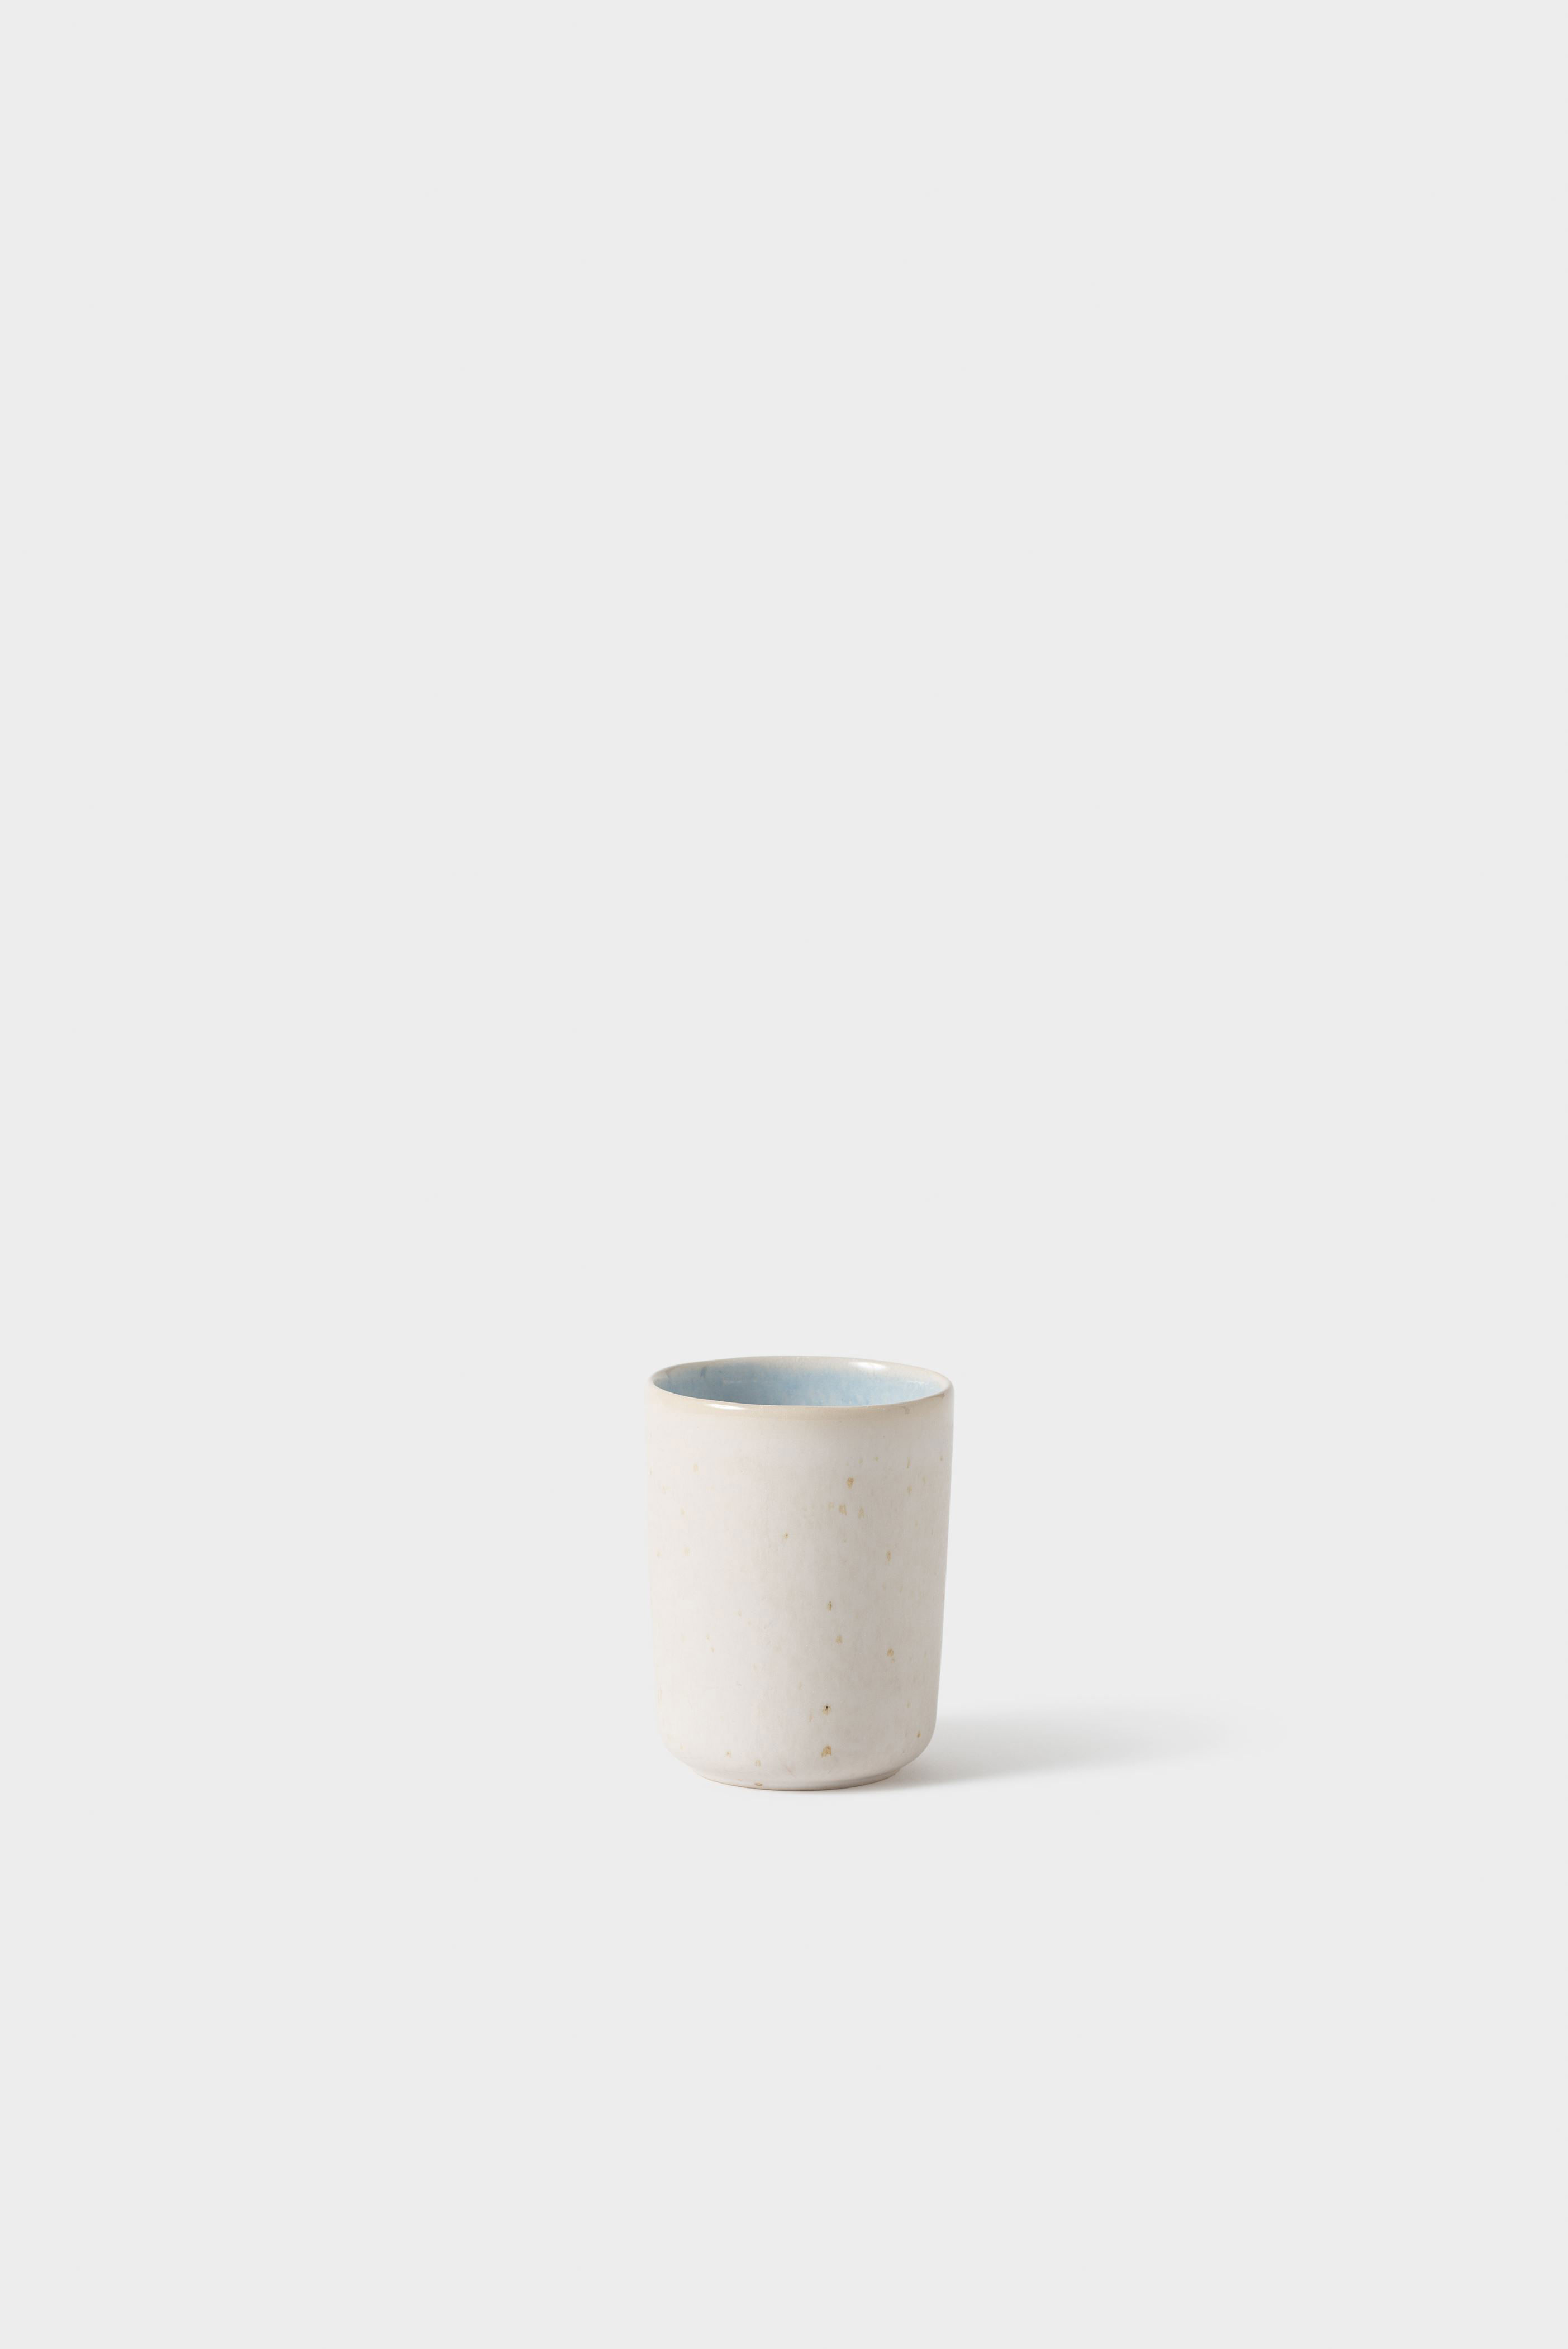 Moonlight Porcelain Milk Pot White 200ml at drinkstuff